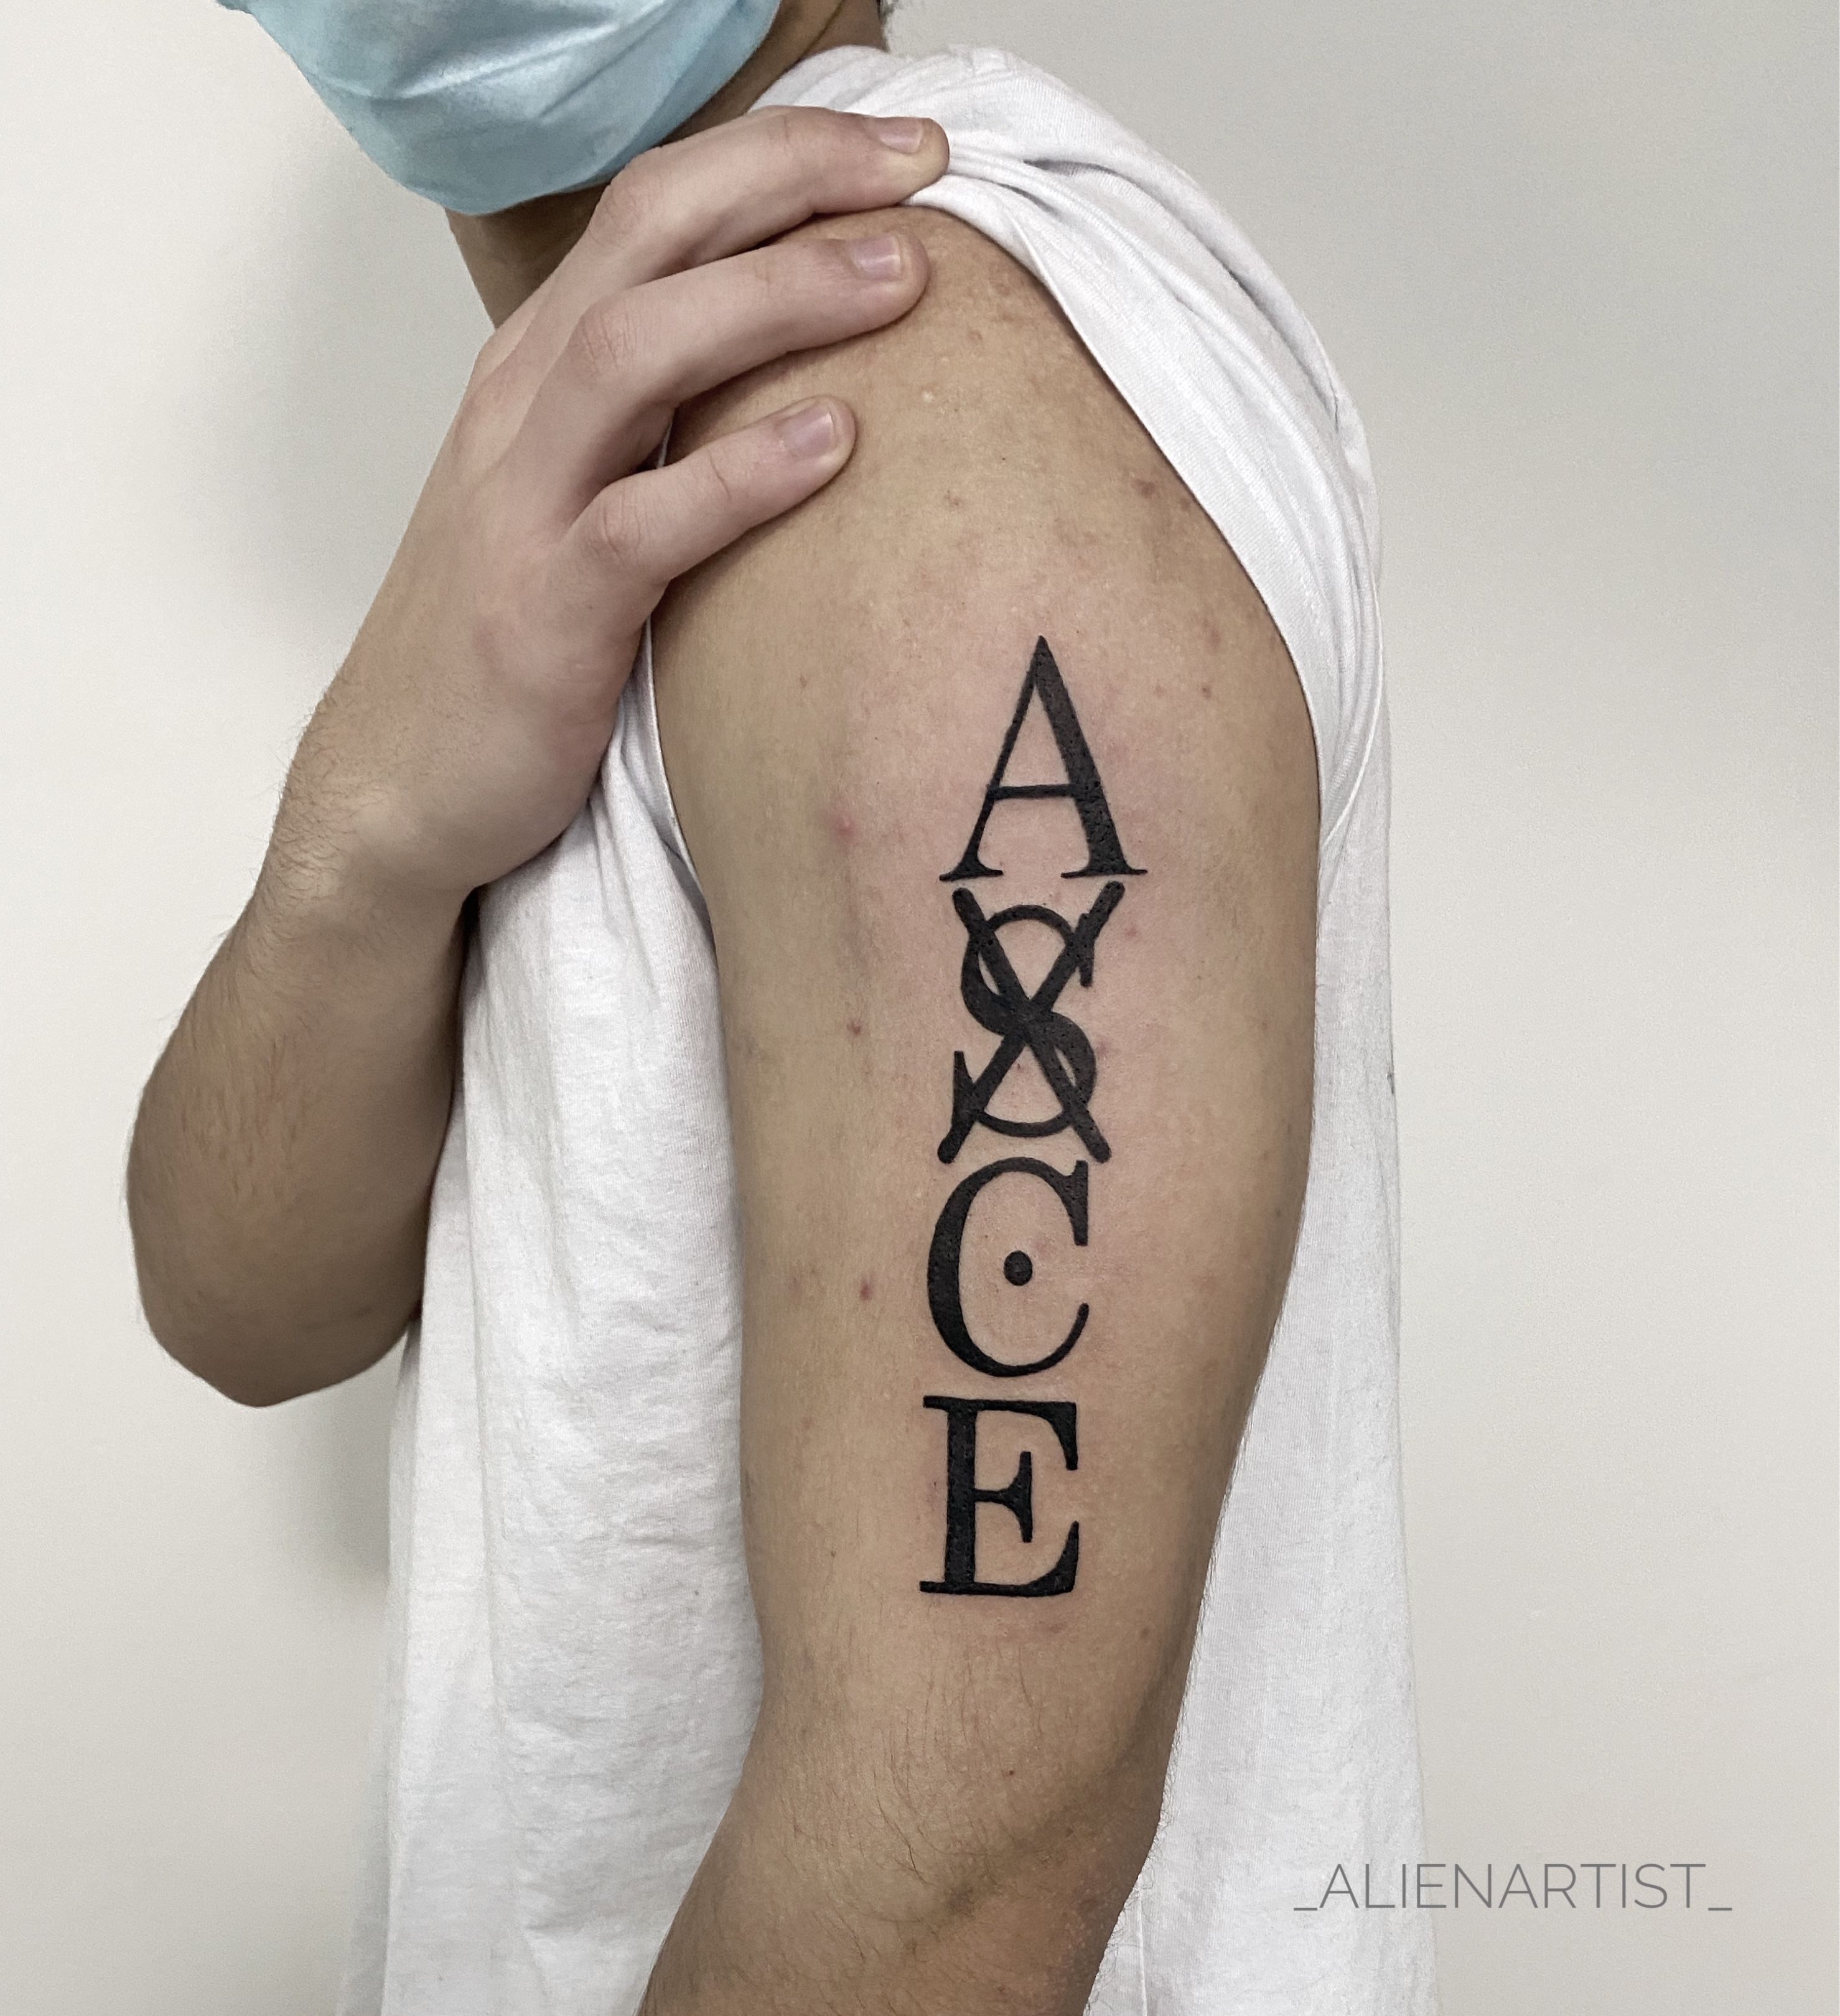 Portgas D Ace tattoo  Ace tattoo one piece, Ace tattoo, One piece tattoos